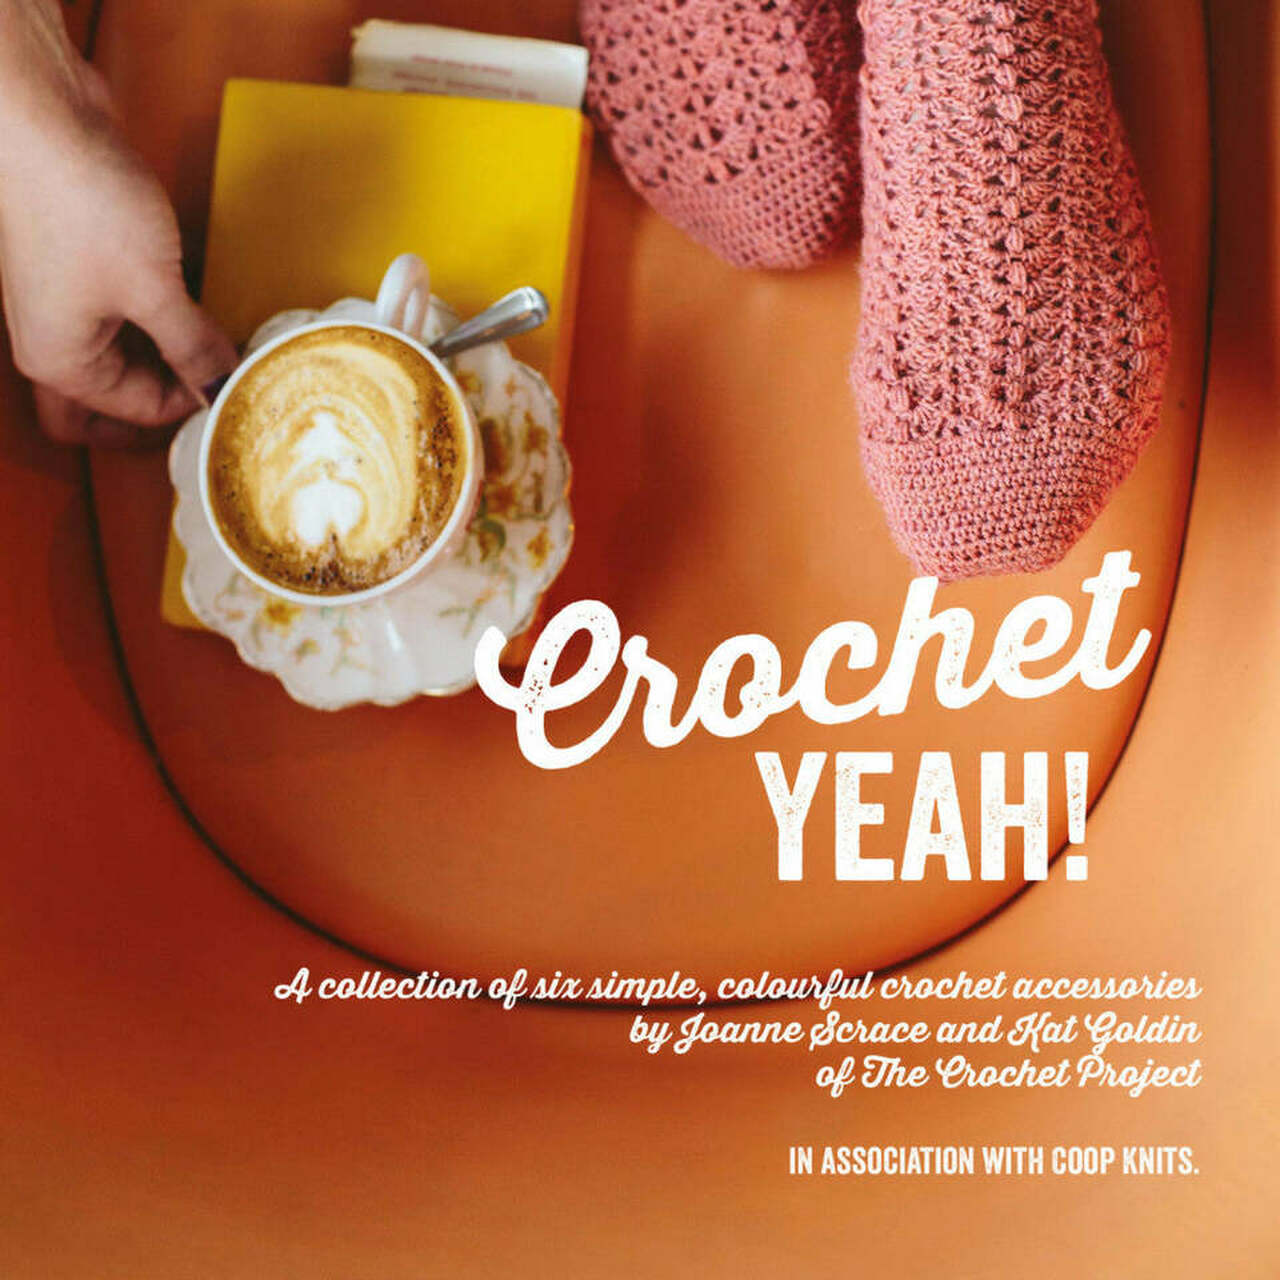 Crochet Yeah!